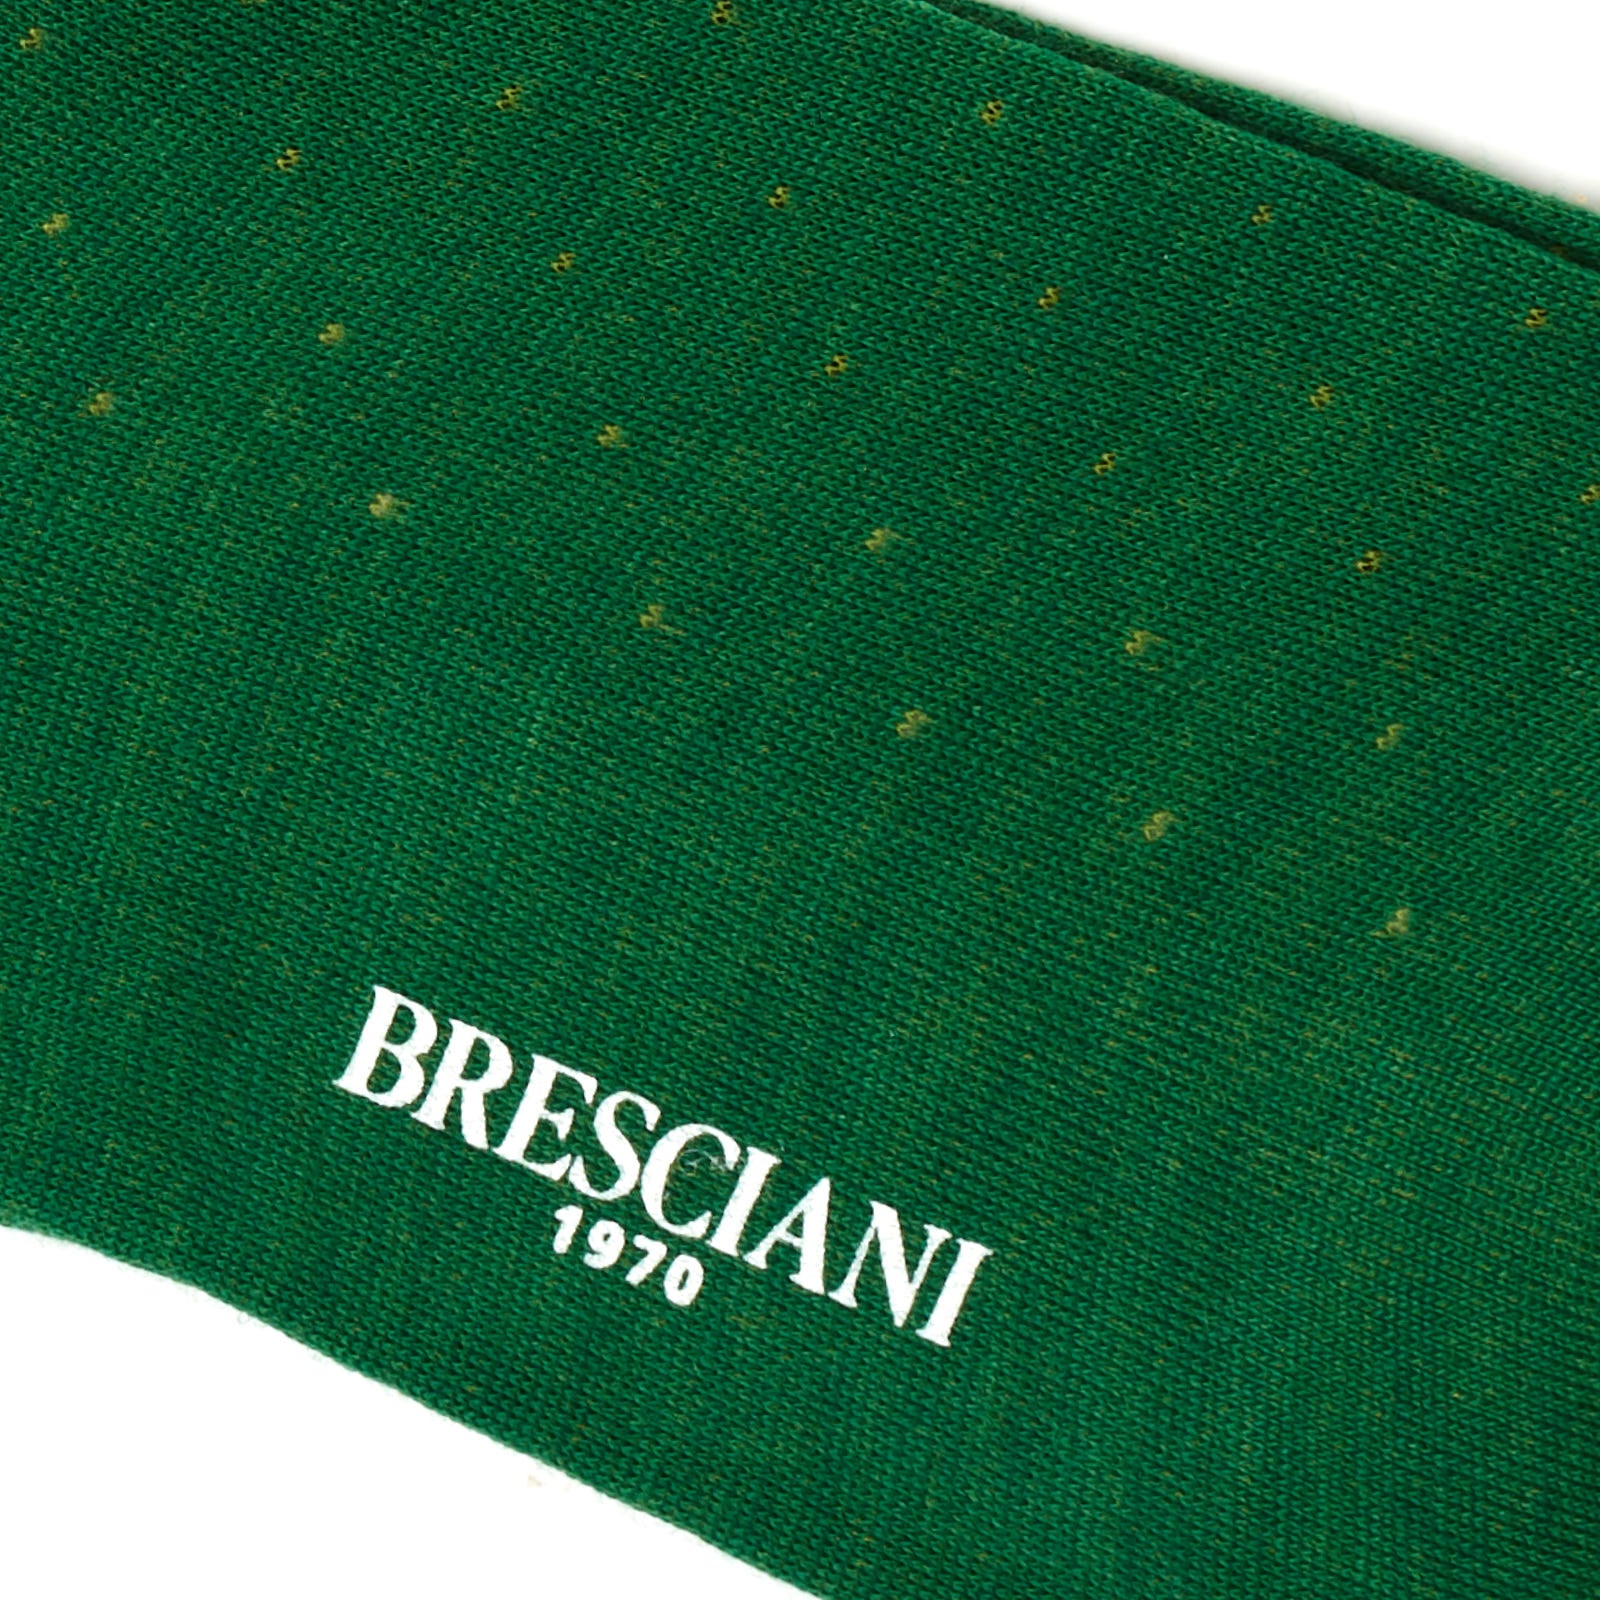 BRESCIANI Wool Polka Dot Design Mid Calf Length Socks M-L BRESCIANI